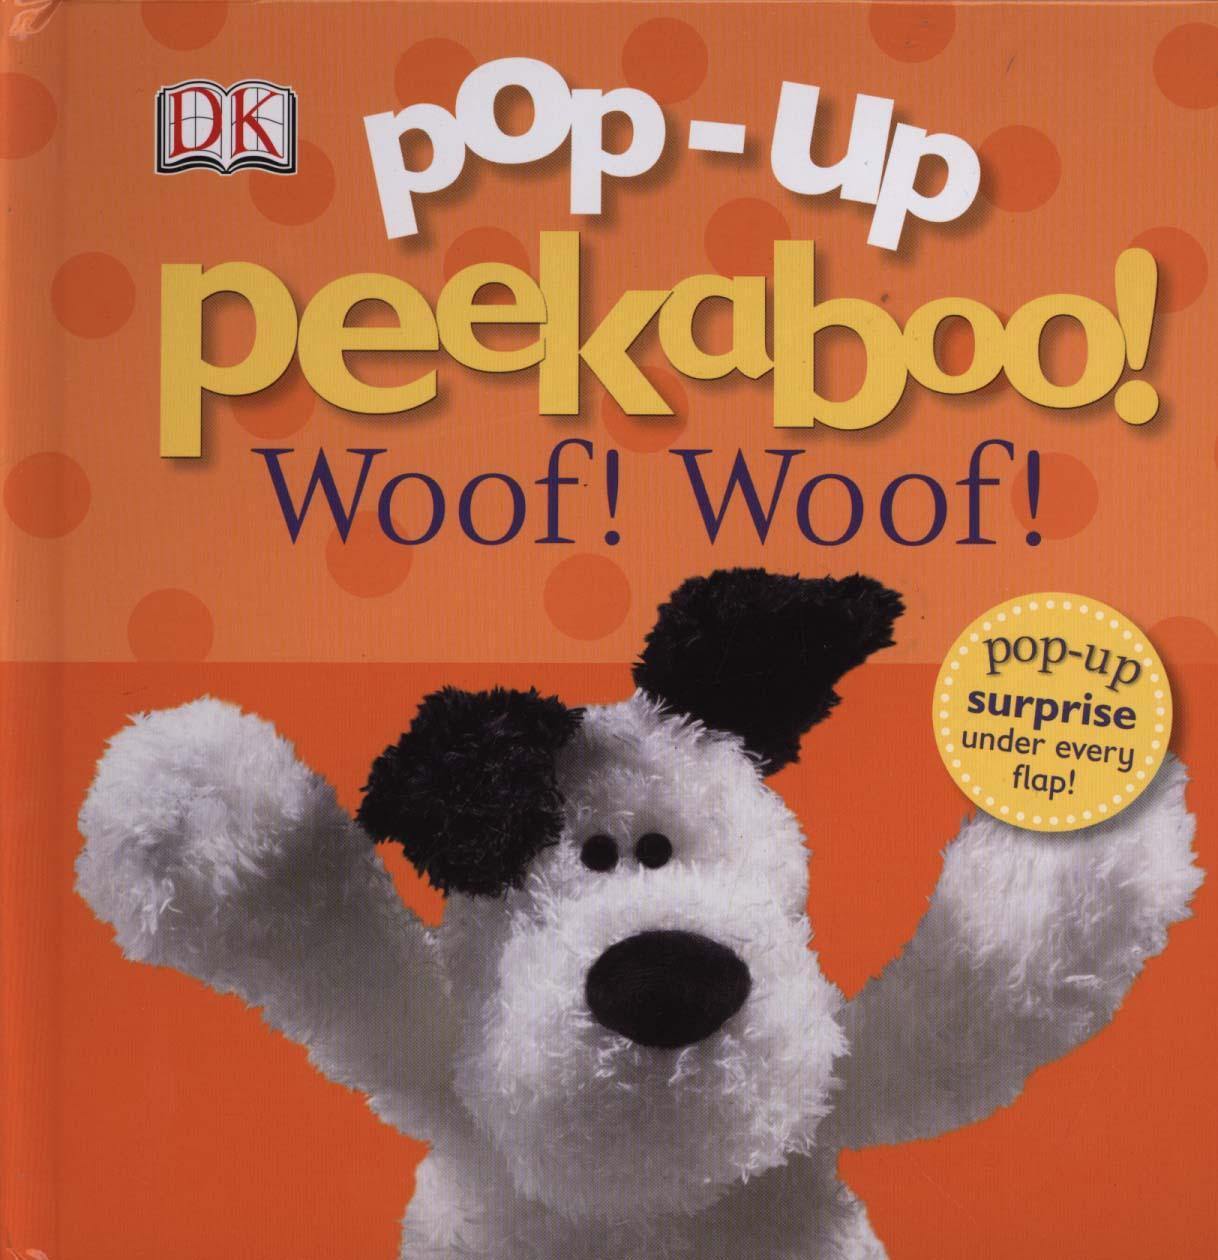 Pop-Up Peekaboo! Woof Woof!